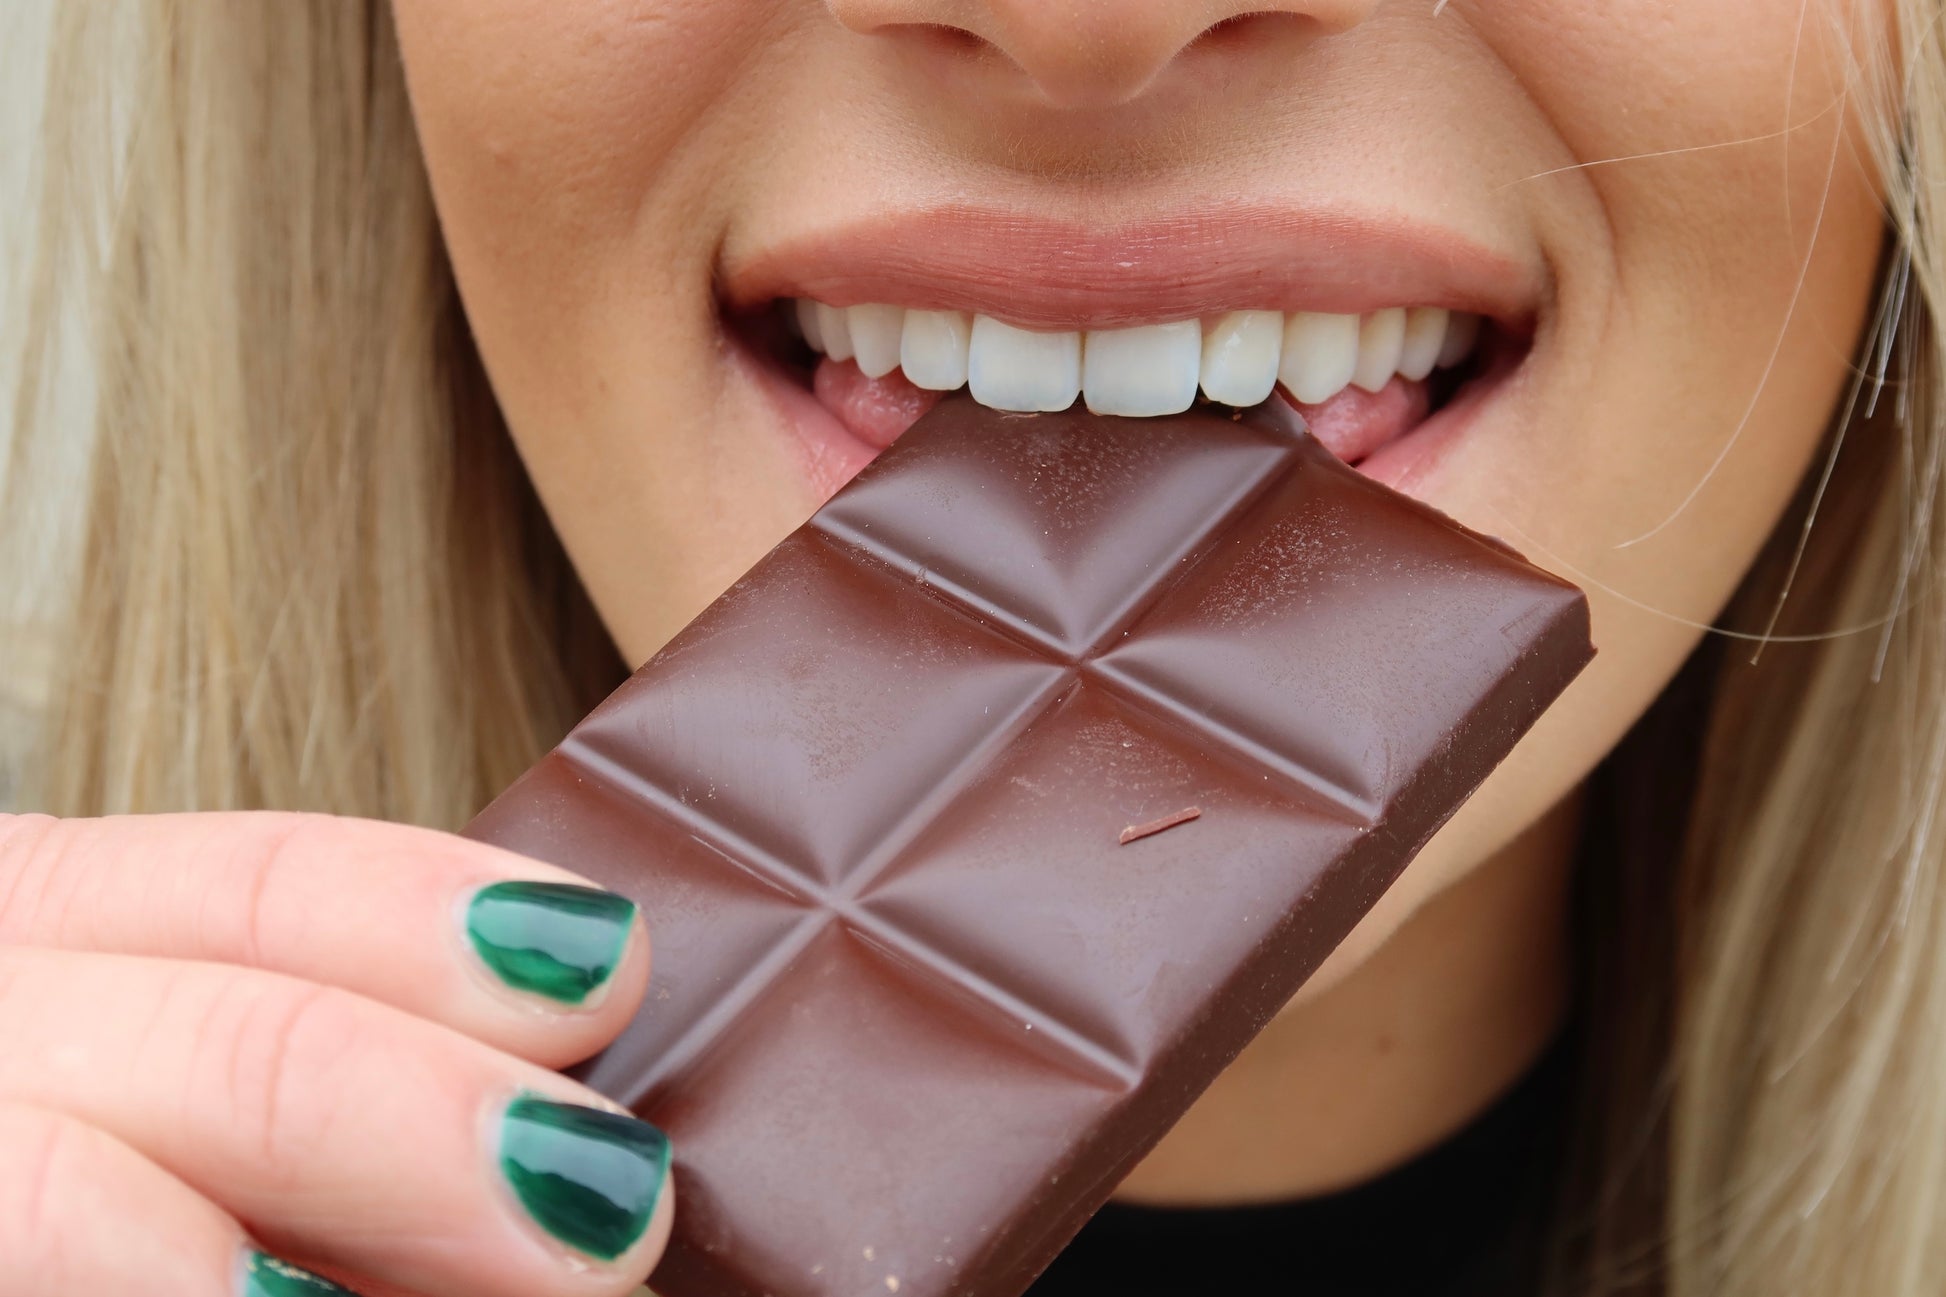 Girl Biting off piece of Macalat Sweet Dark Chocolate Bar